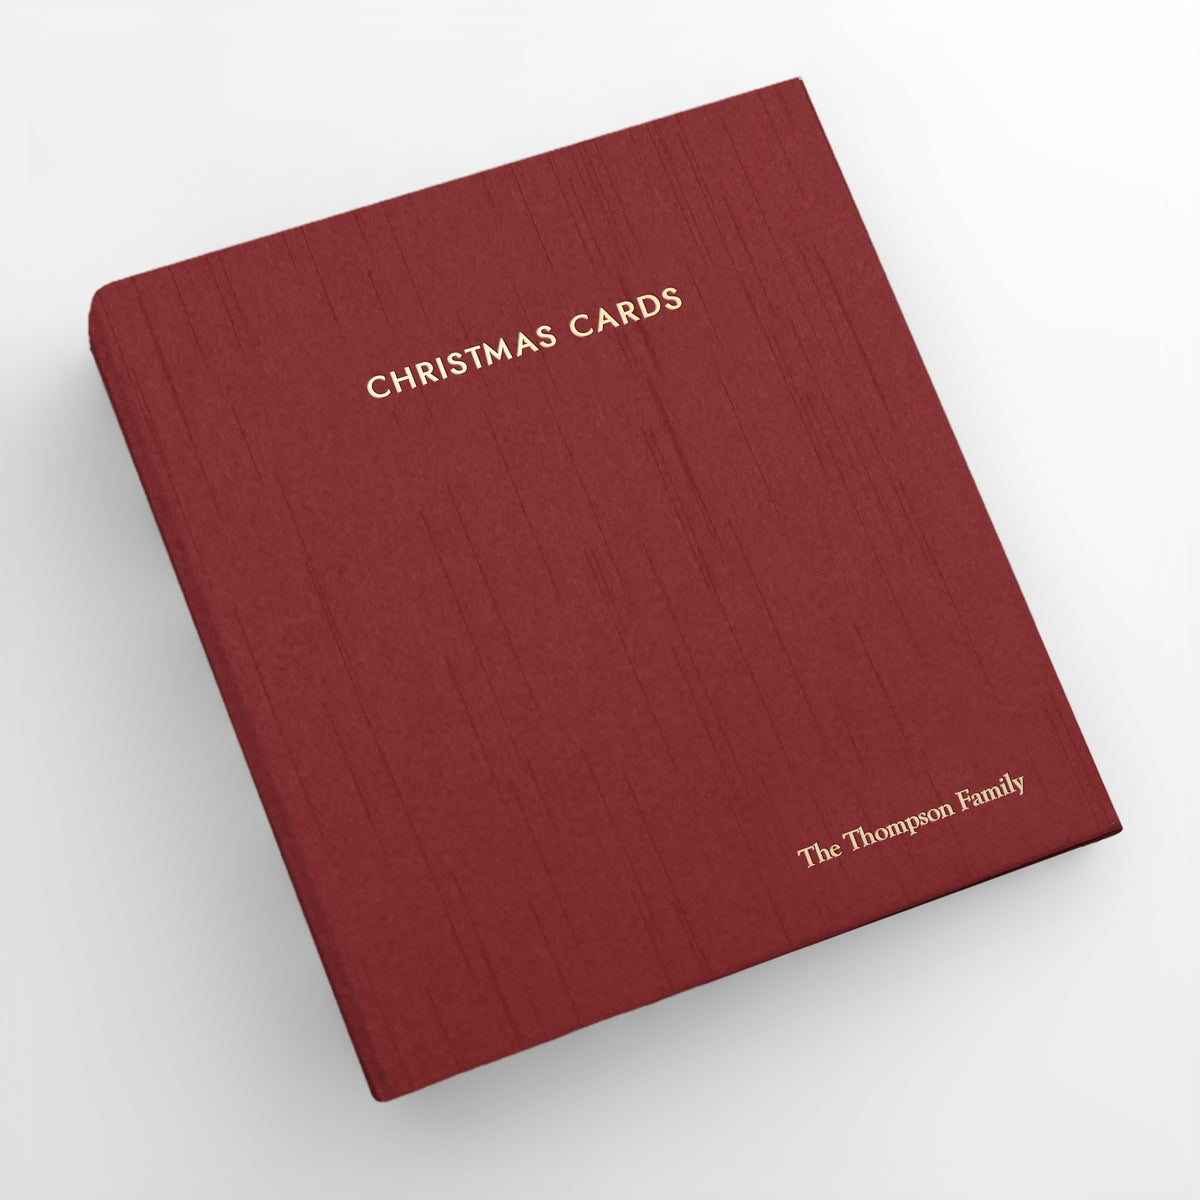 Christmas Card Album, Cover: Garnet Silk